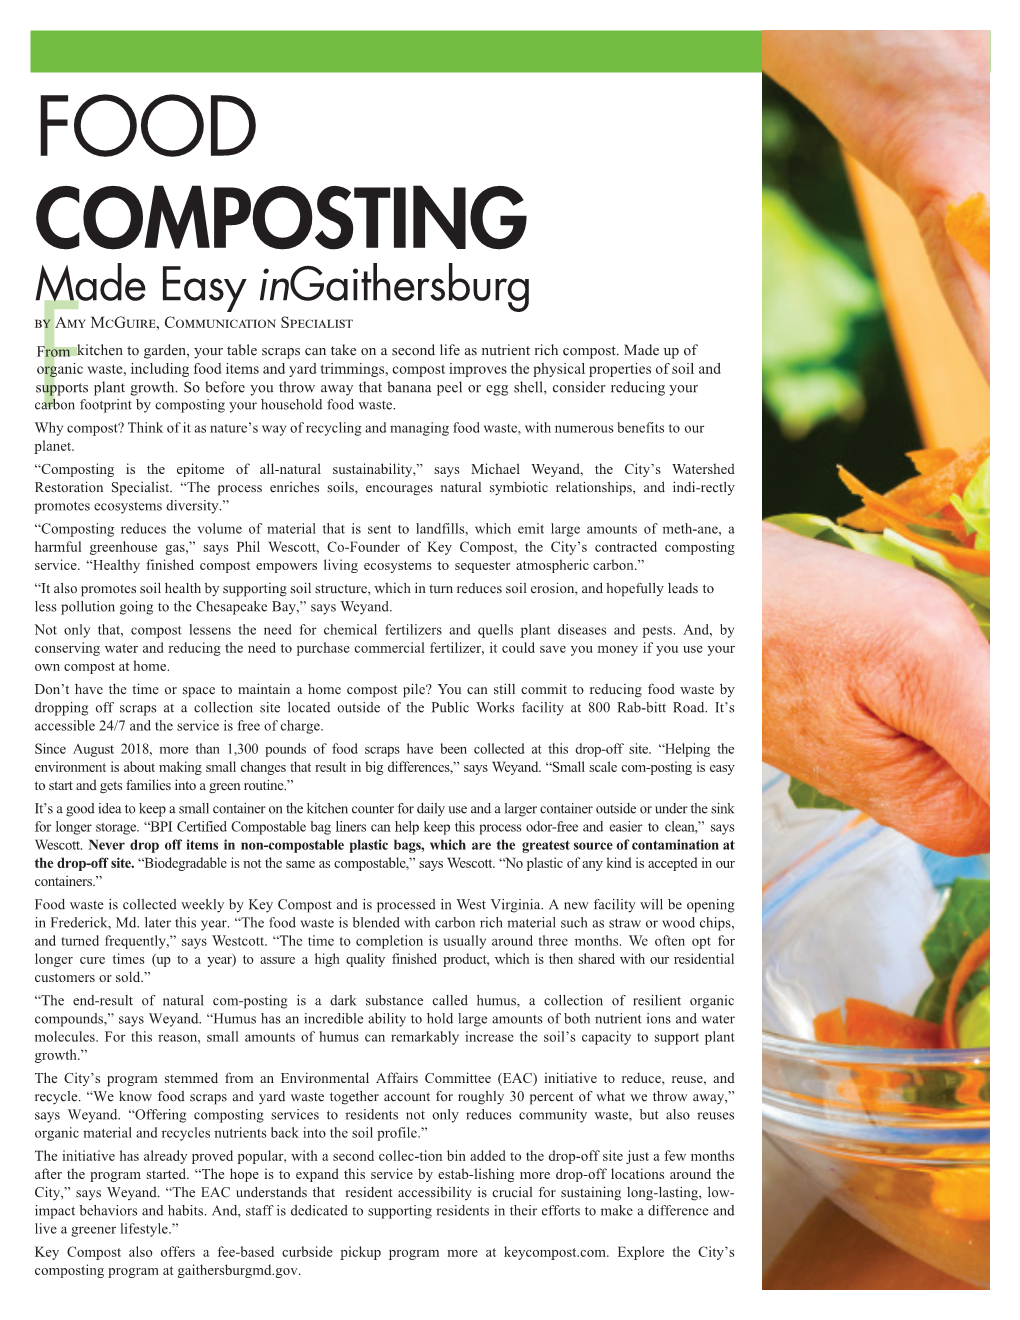 Food Composting